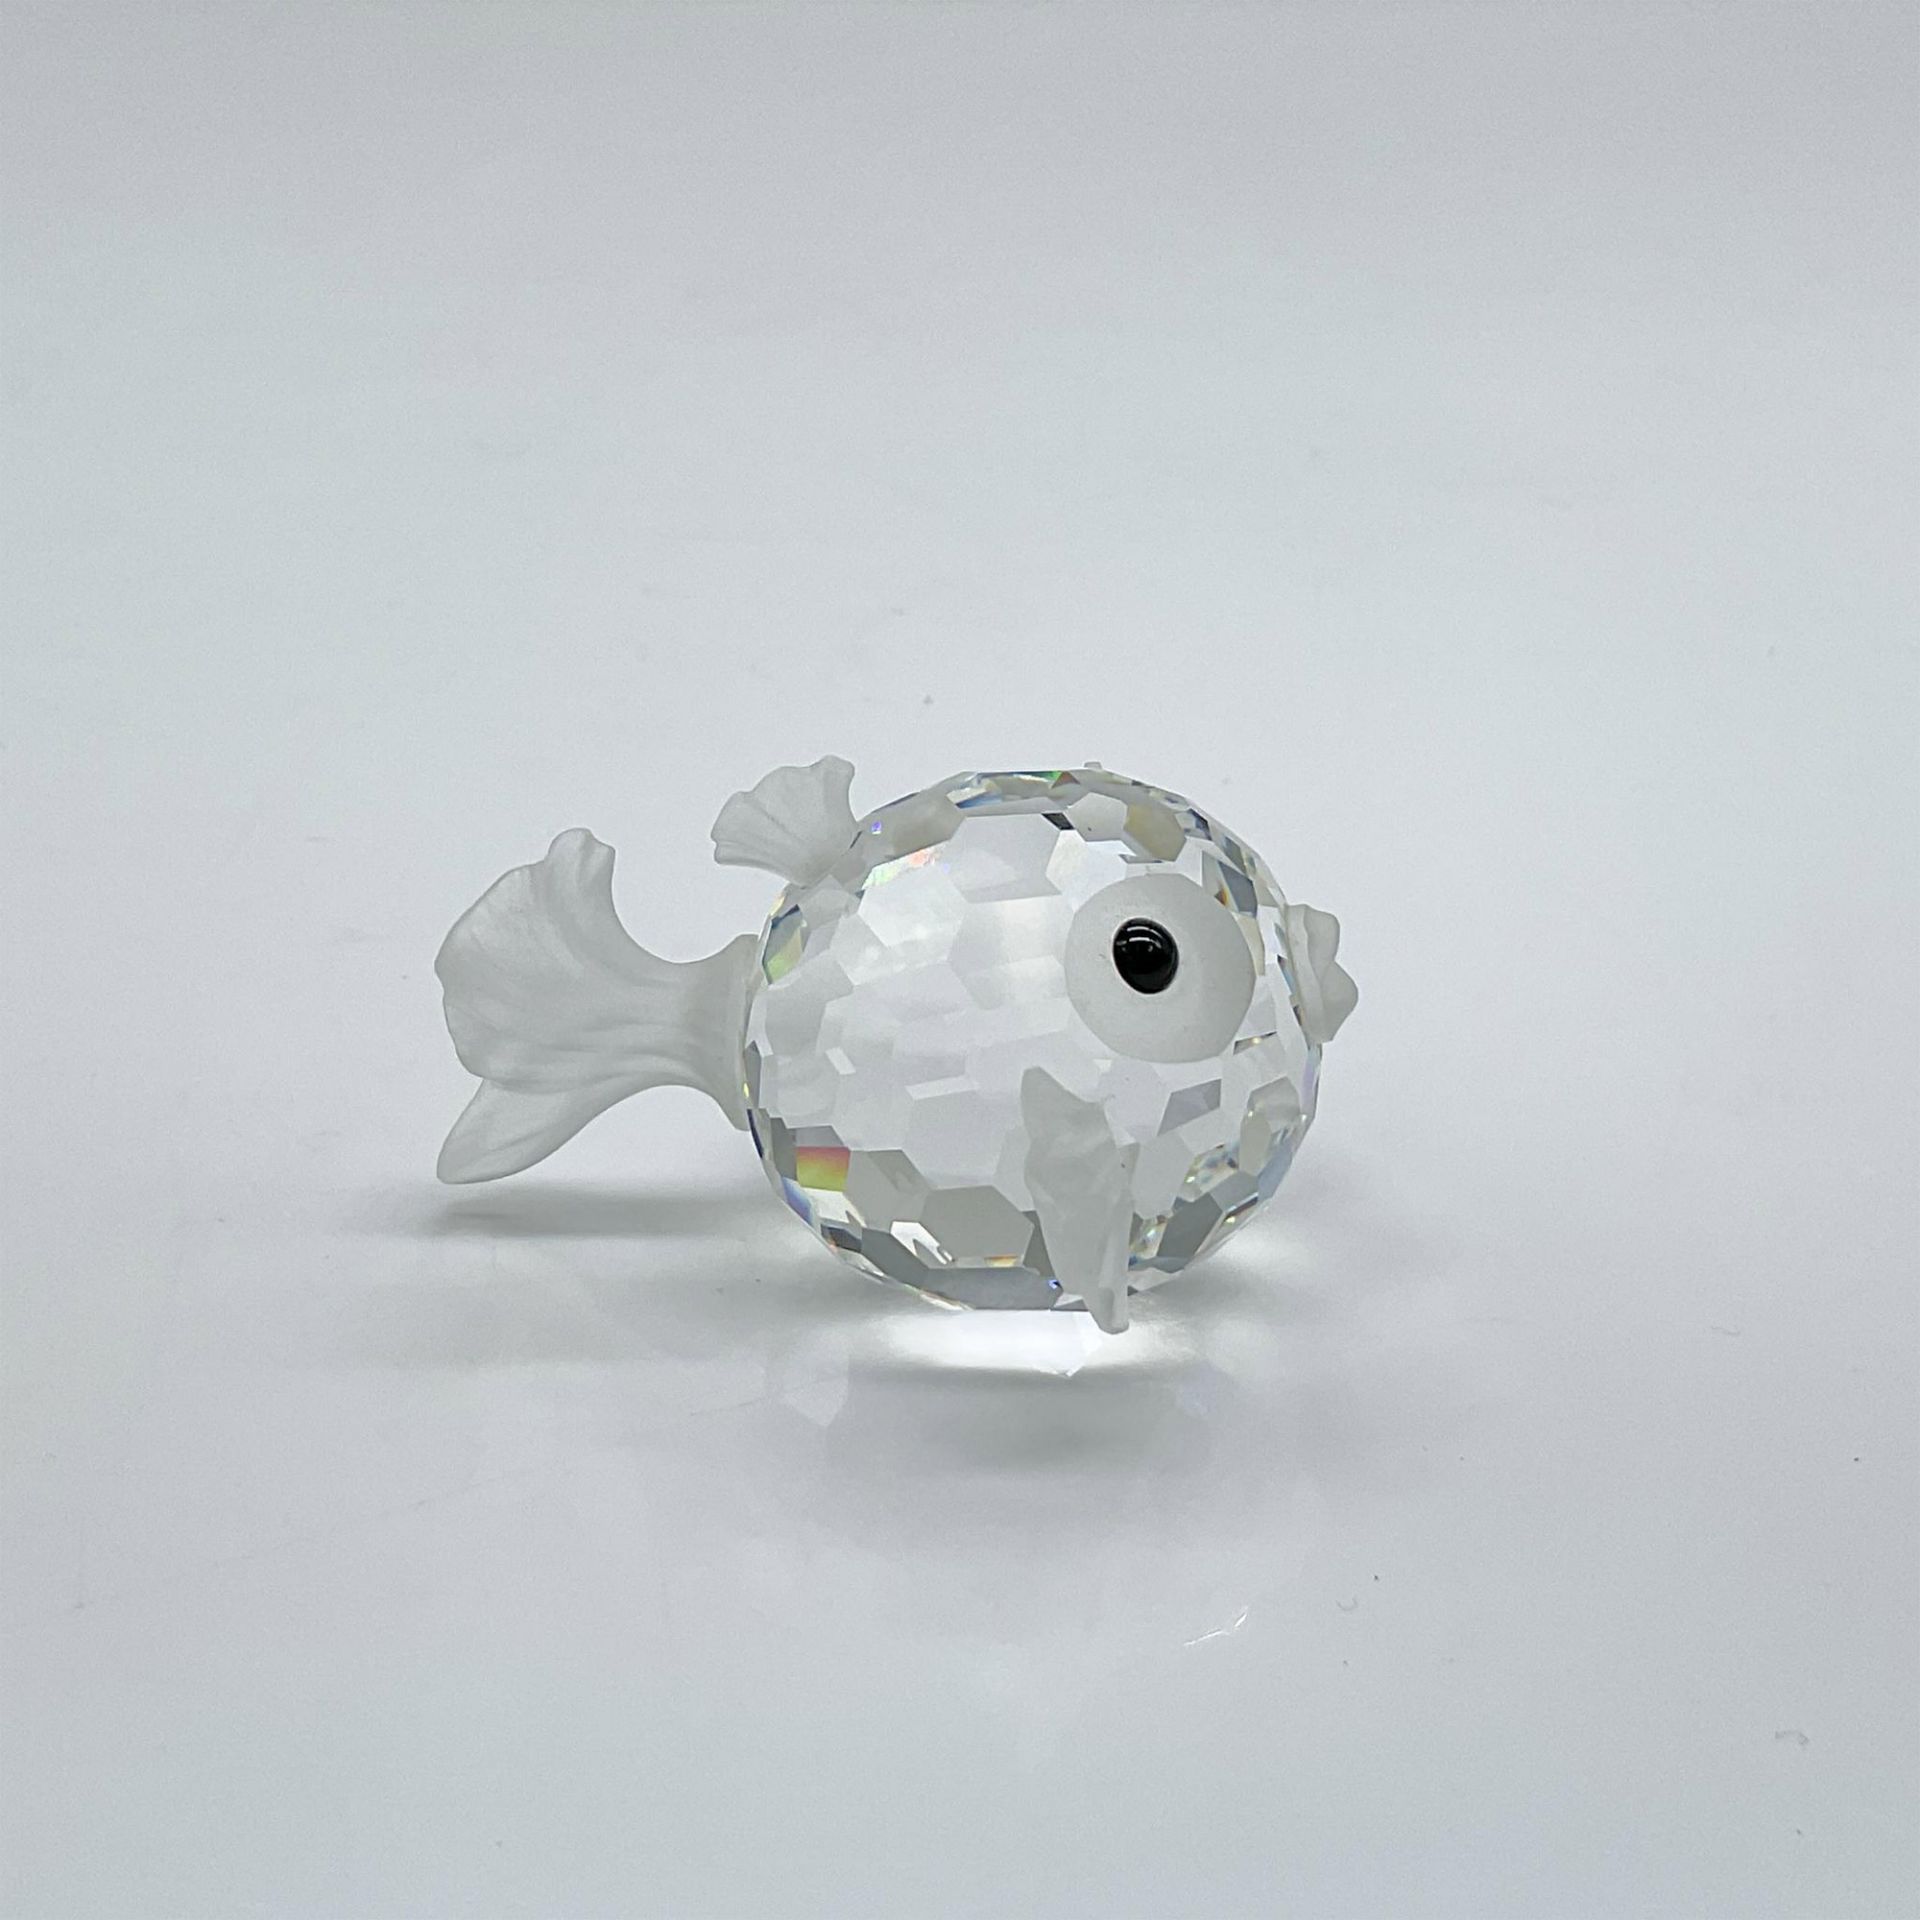 Swarovski Silver Crystal Figurine, Small Blowfish - Image 2 of 6